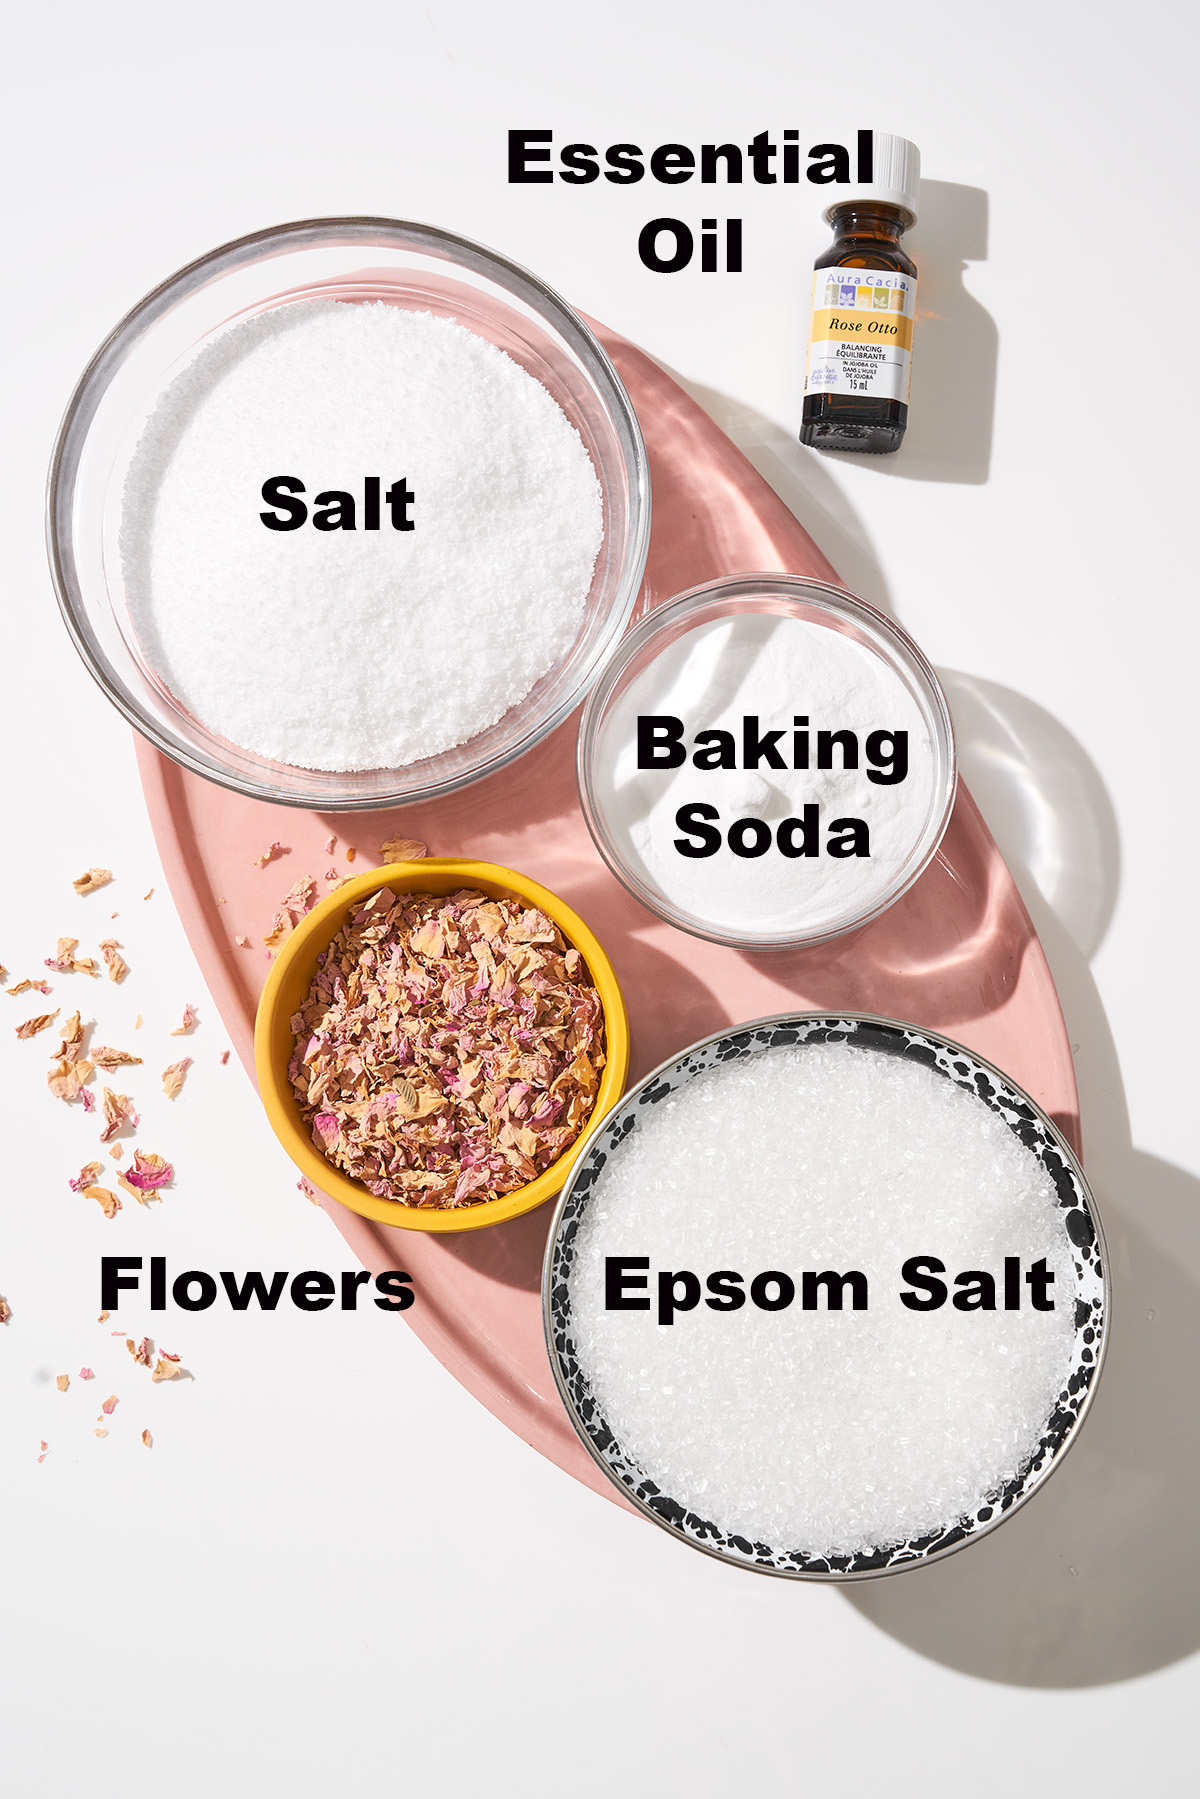 Bath salts ingredients with labels.